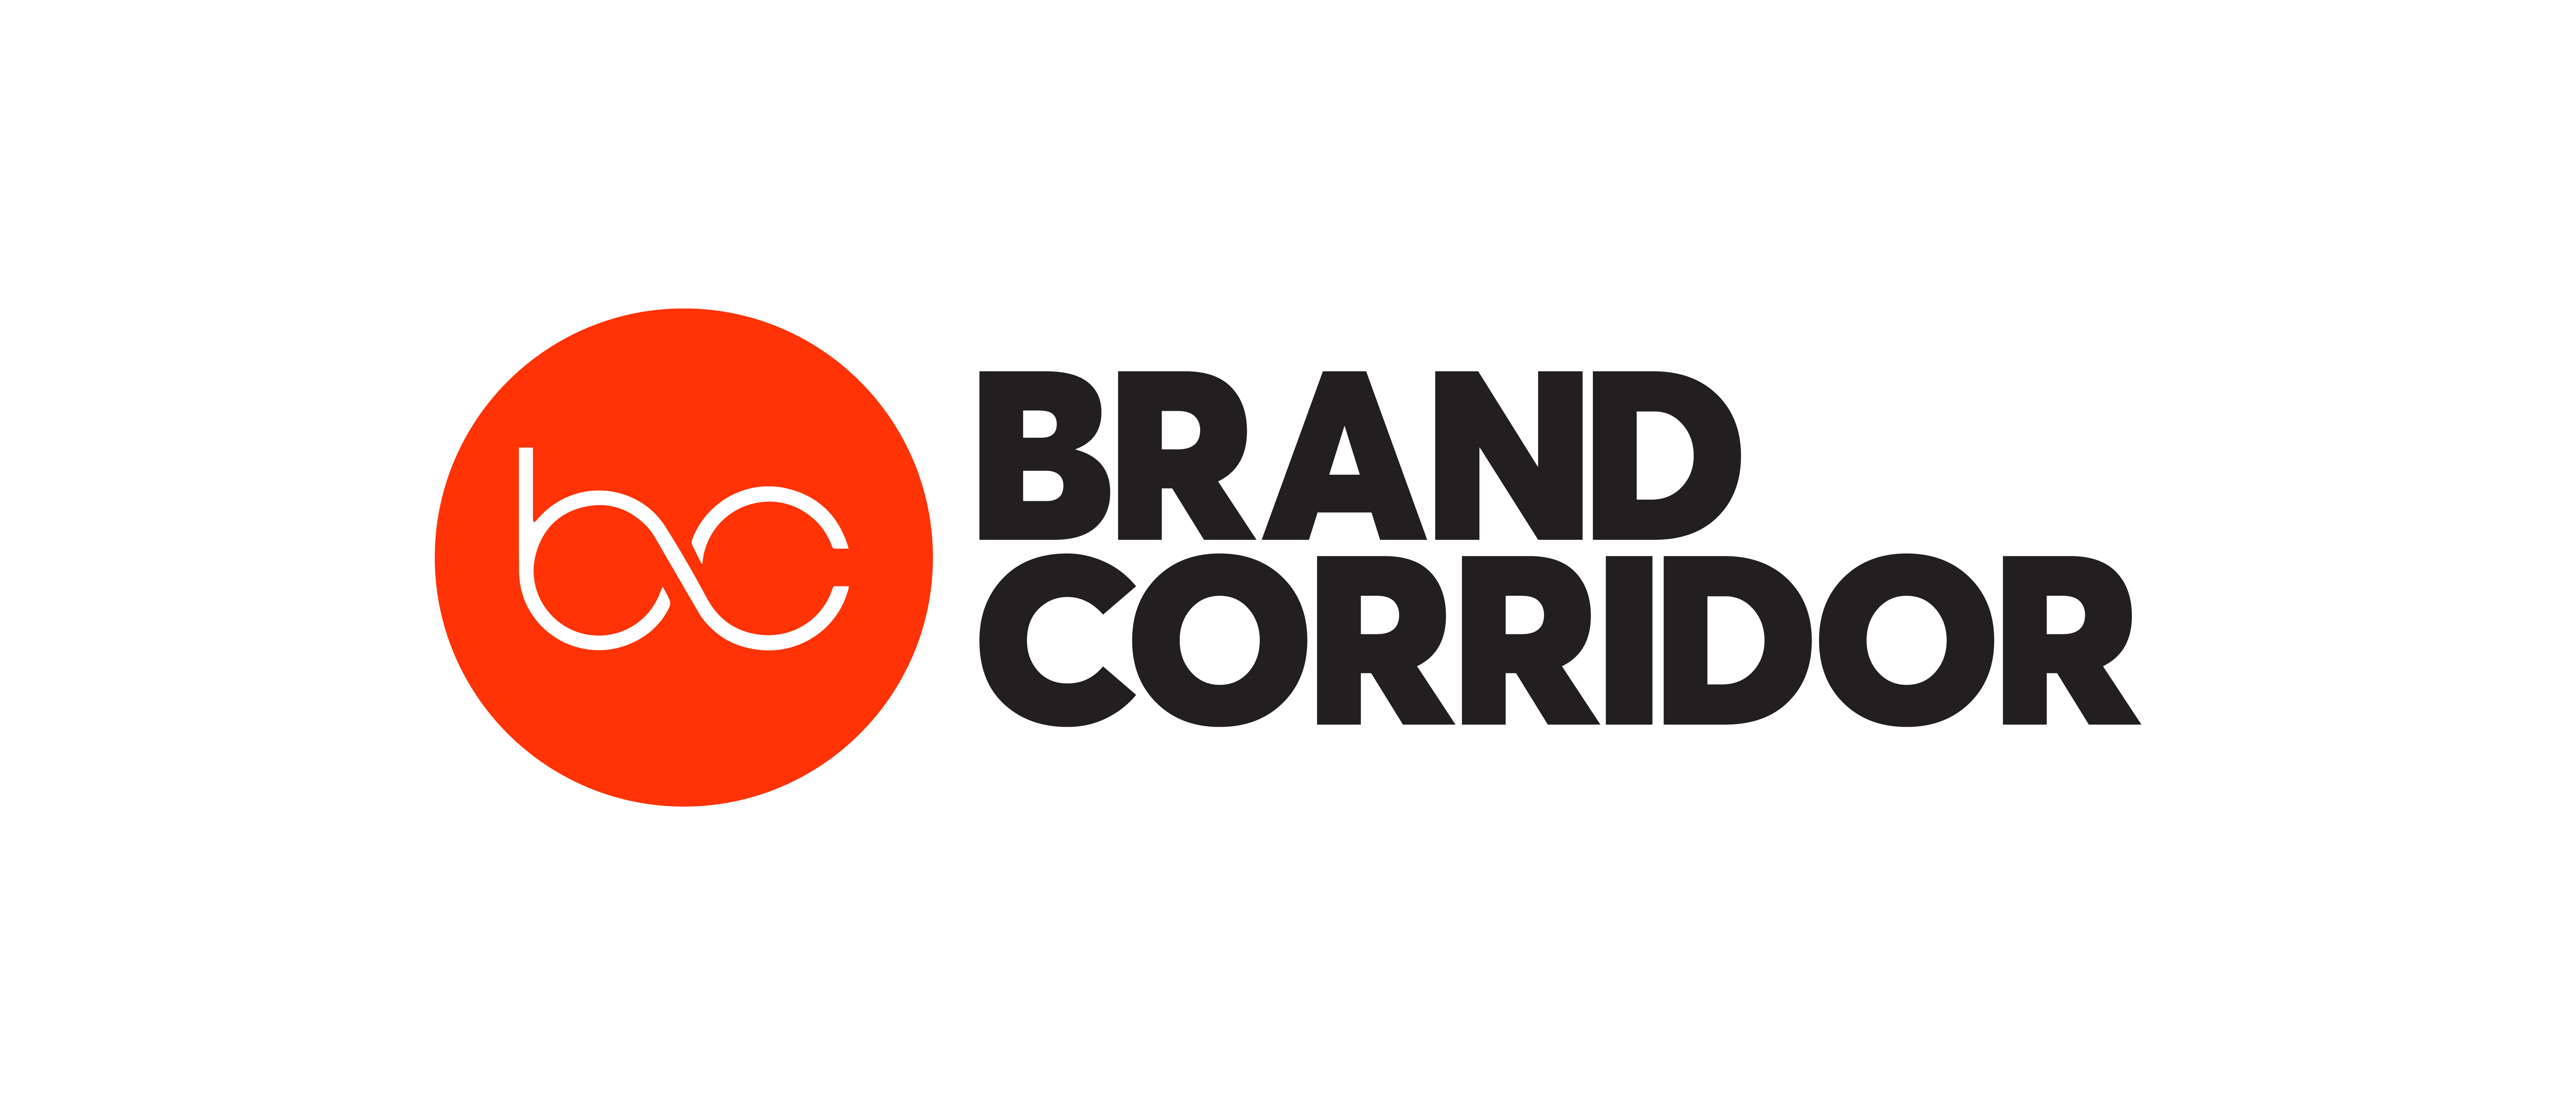 Brand Corridor - Content Marketing Agency